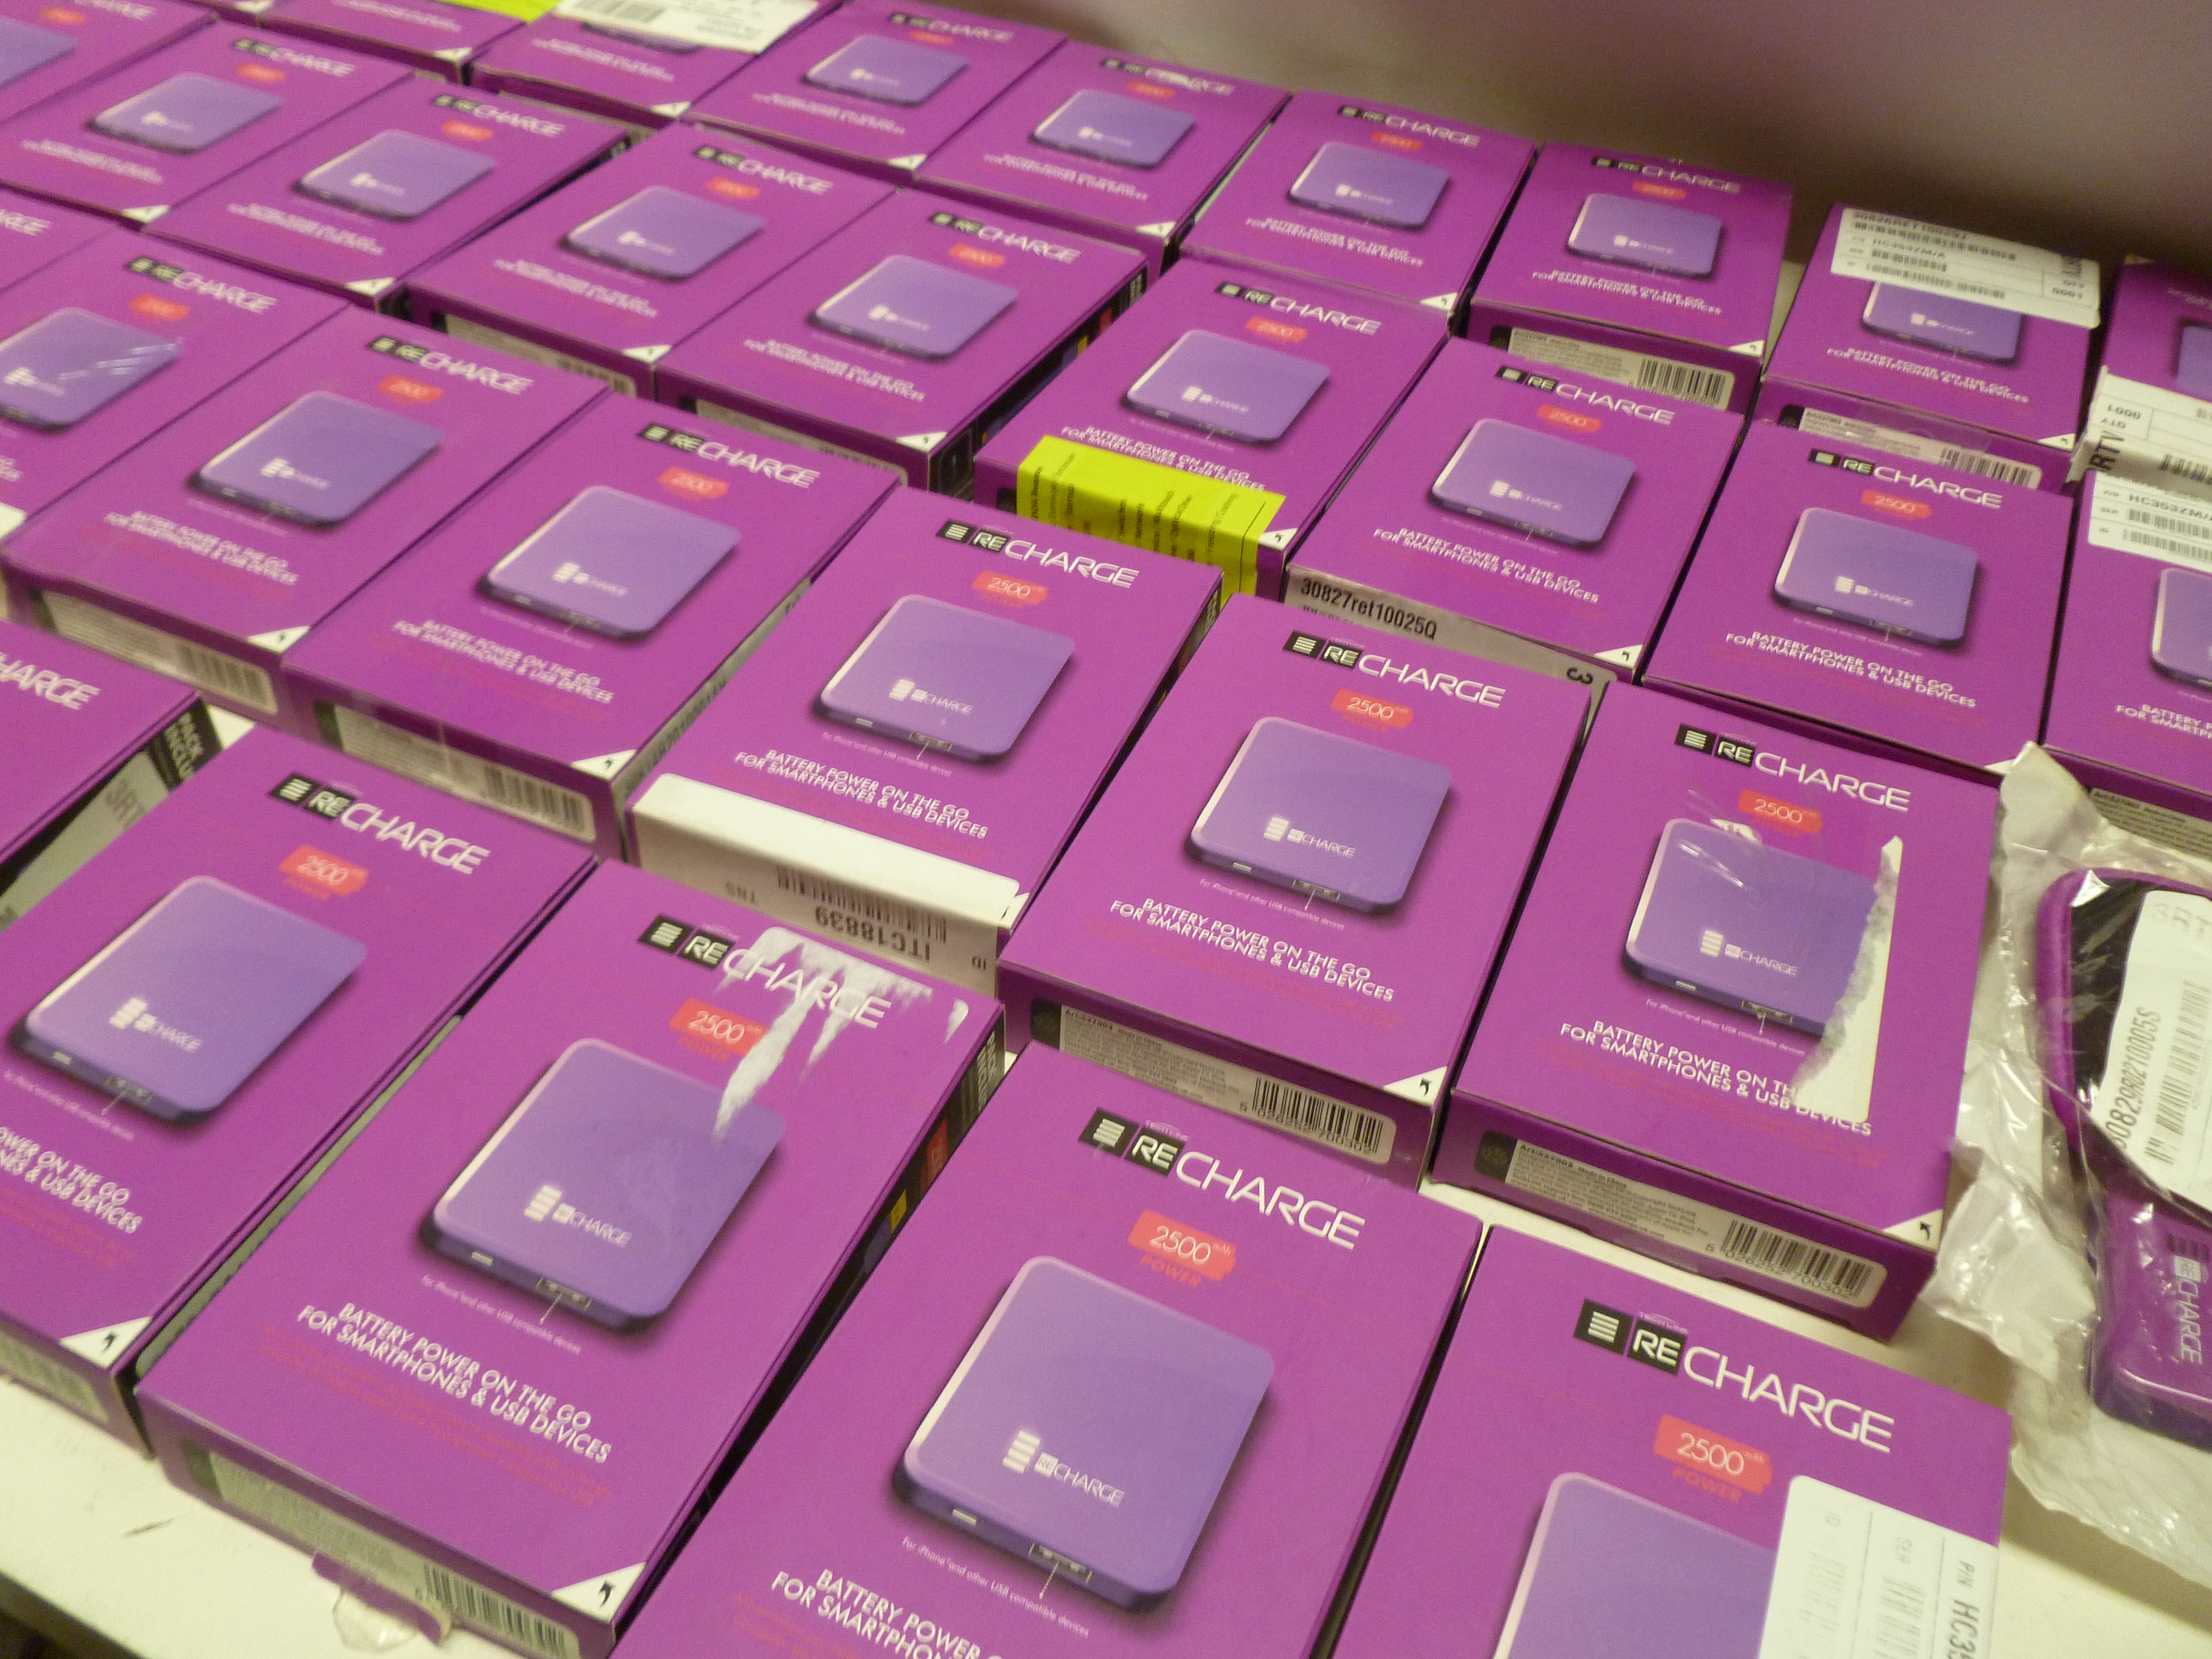 20 x Techlink Recharge 2500 Portable Pocket Power USB Charger Powerbank 2500mAh untested customer returns purple